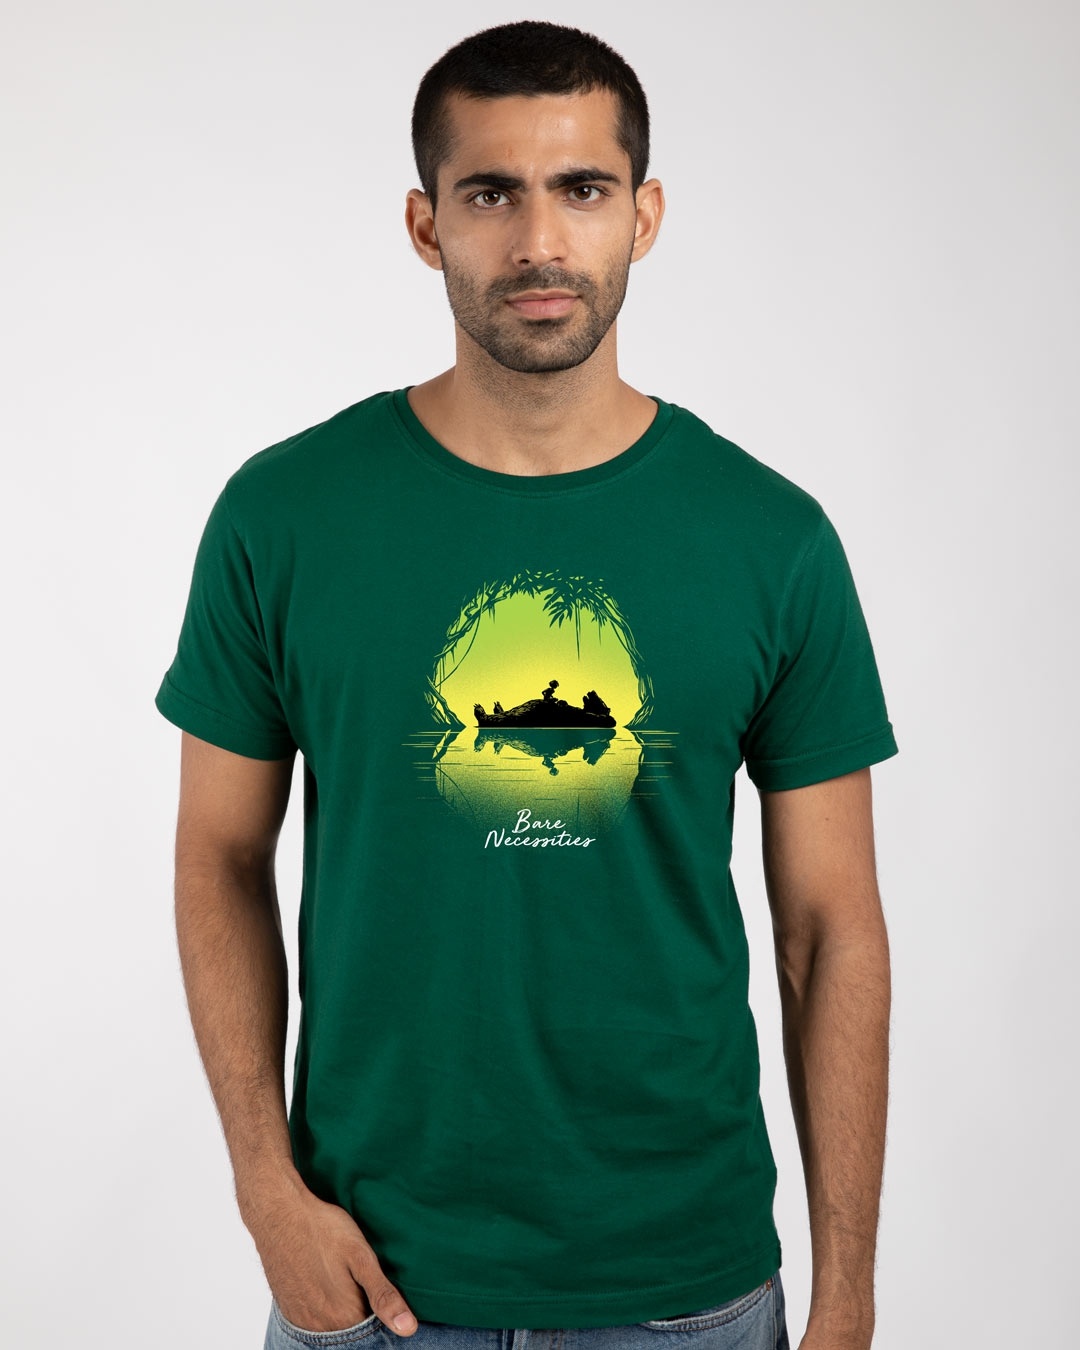 Bare Denim Green Cotton T-shirt - Buy Bare Denim Green Cotton T-shirt  Online at Best Prices in India on Snapdeal